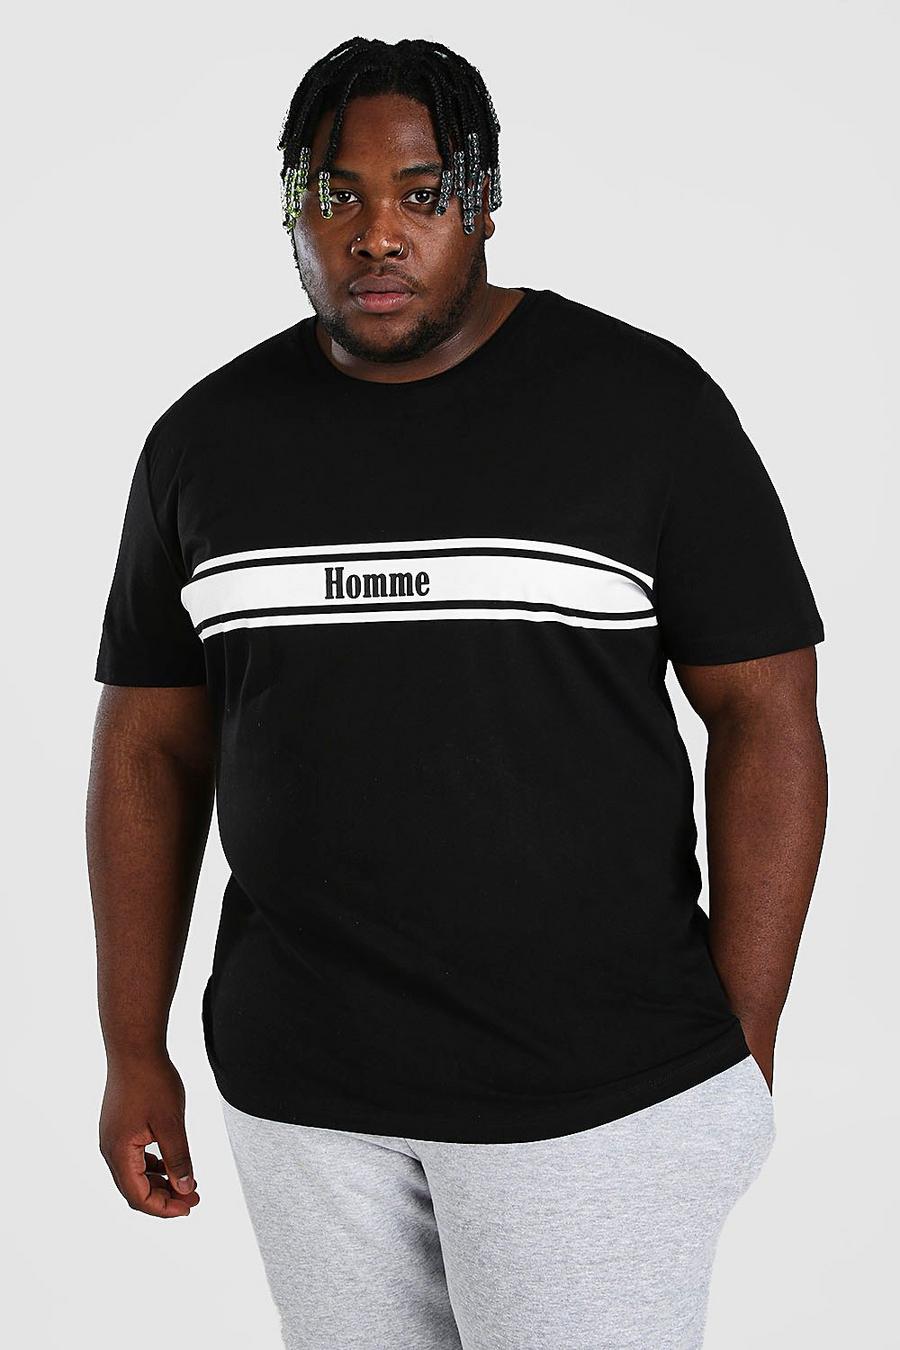 Black Plus Size Homme Print T-Shirt image number 1